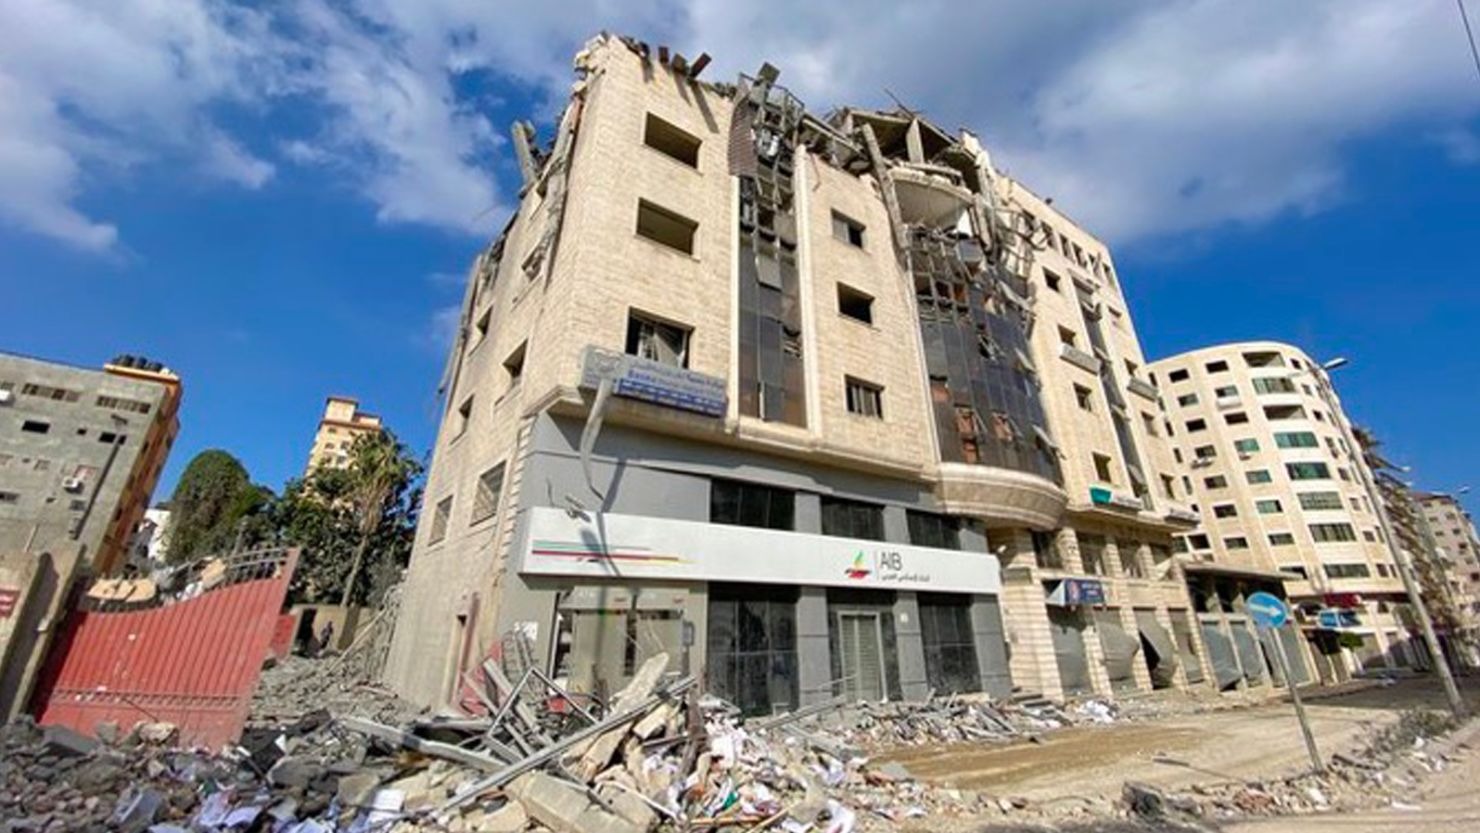 Aid Group Reports Israeli Airstrike Hits its Facility in Gaza